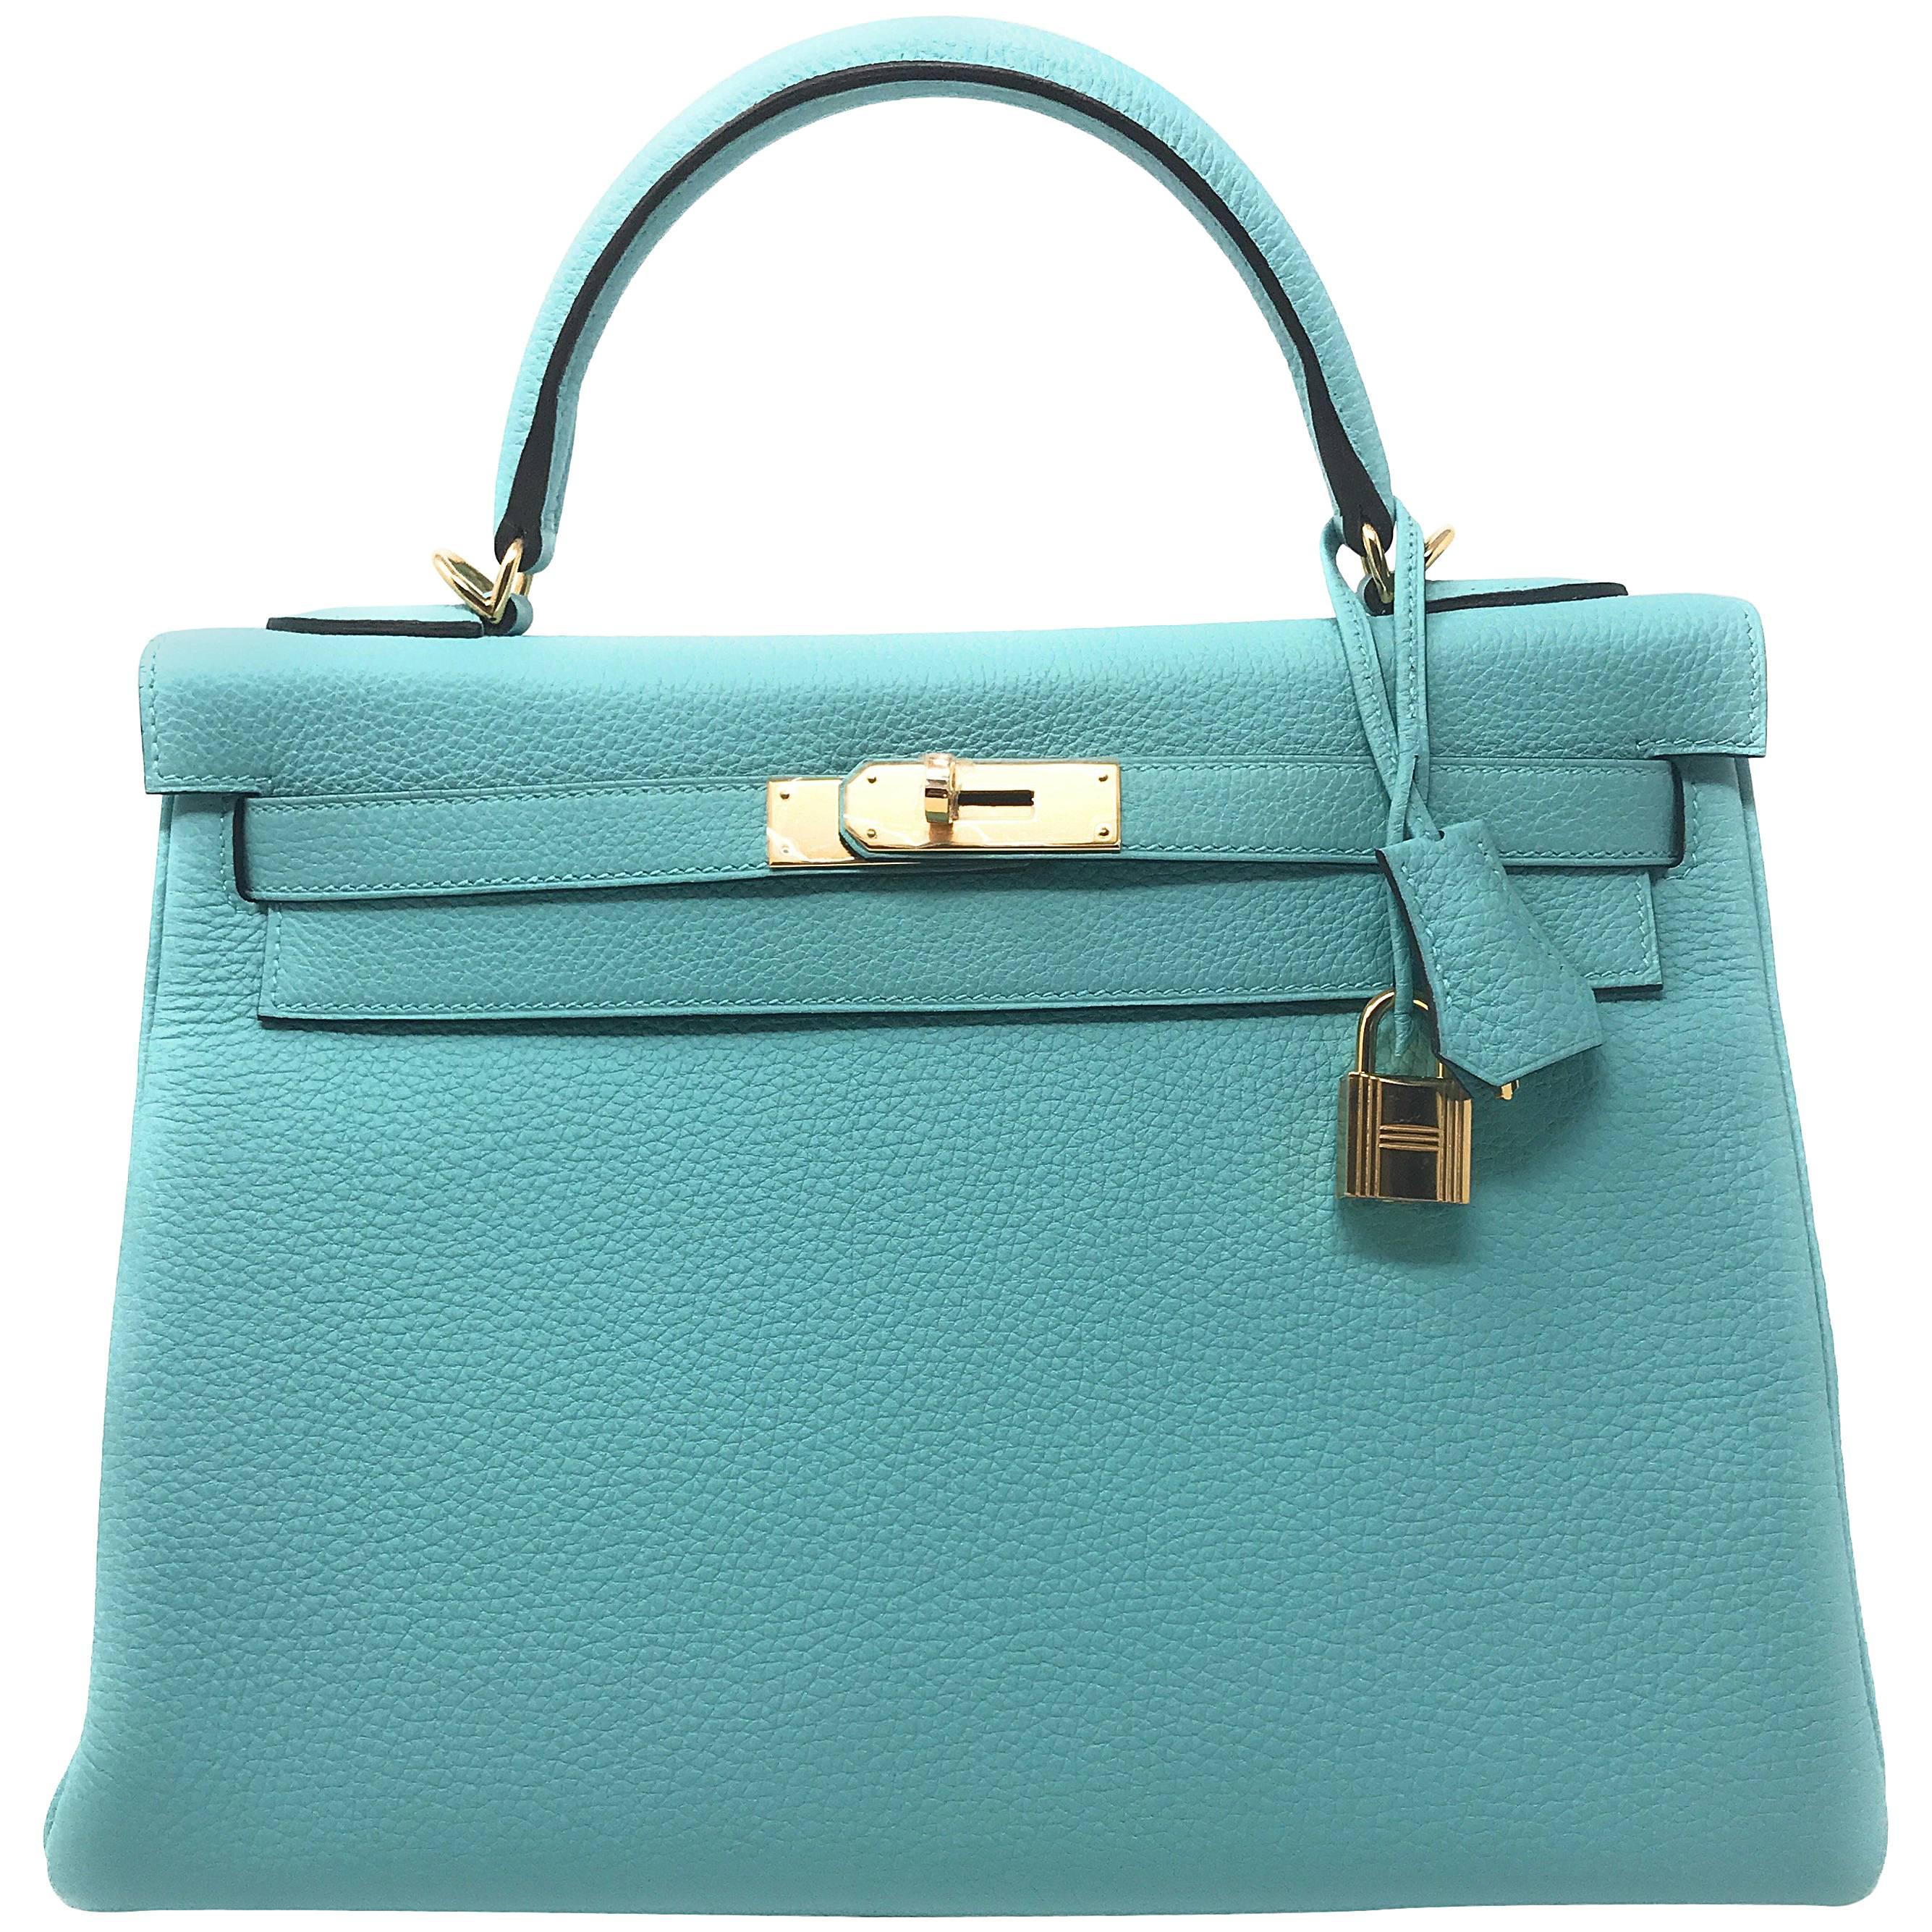 Hermes Kelly 32cm Blue Atoll Bag For Sale